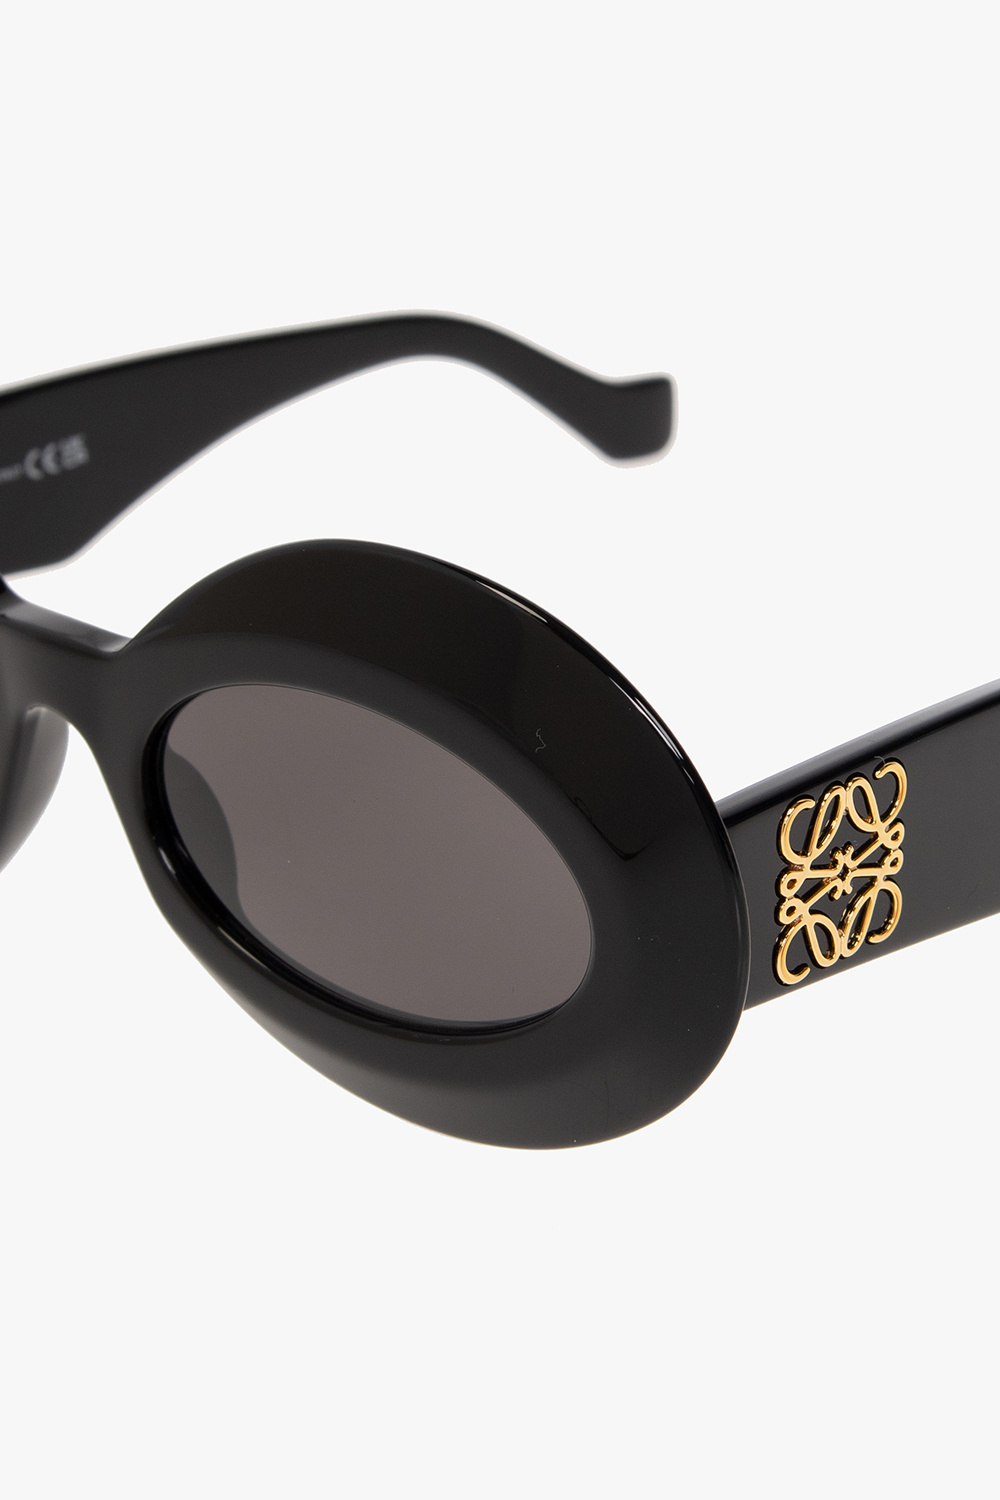 Loewe garrett leight calabar sunglasses 2062 49 bklcy sfbs